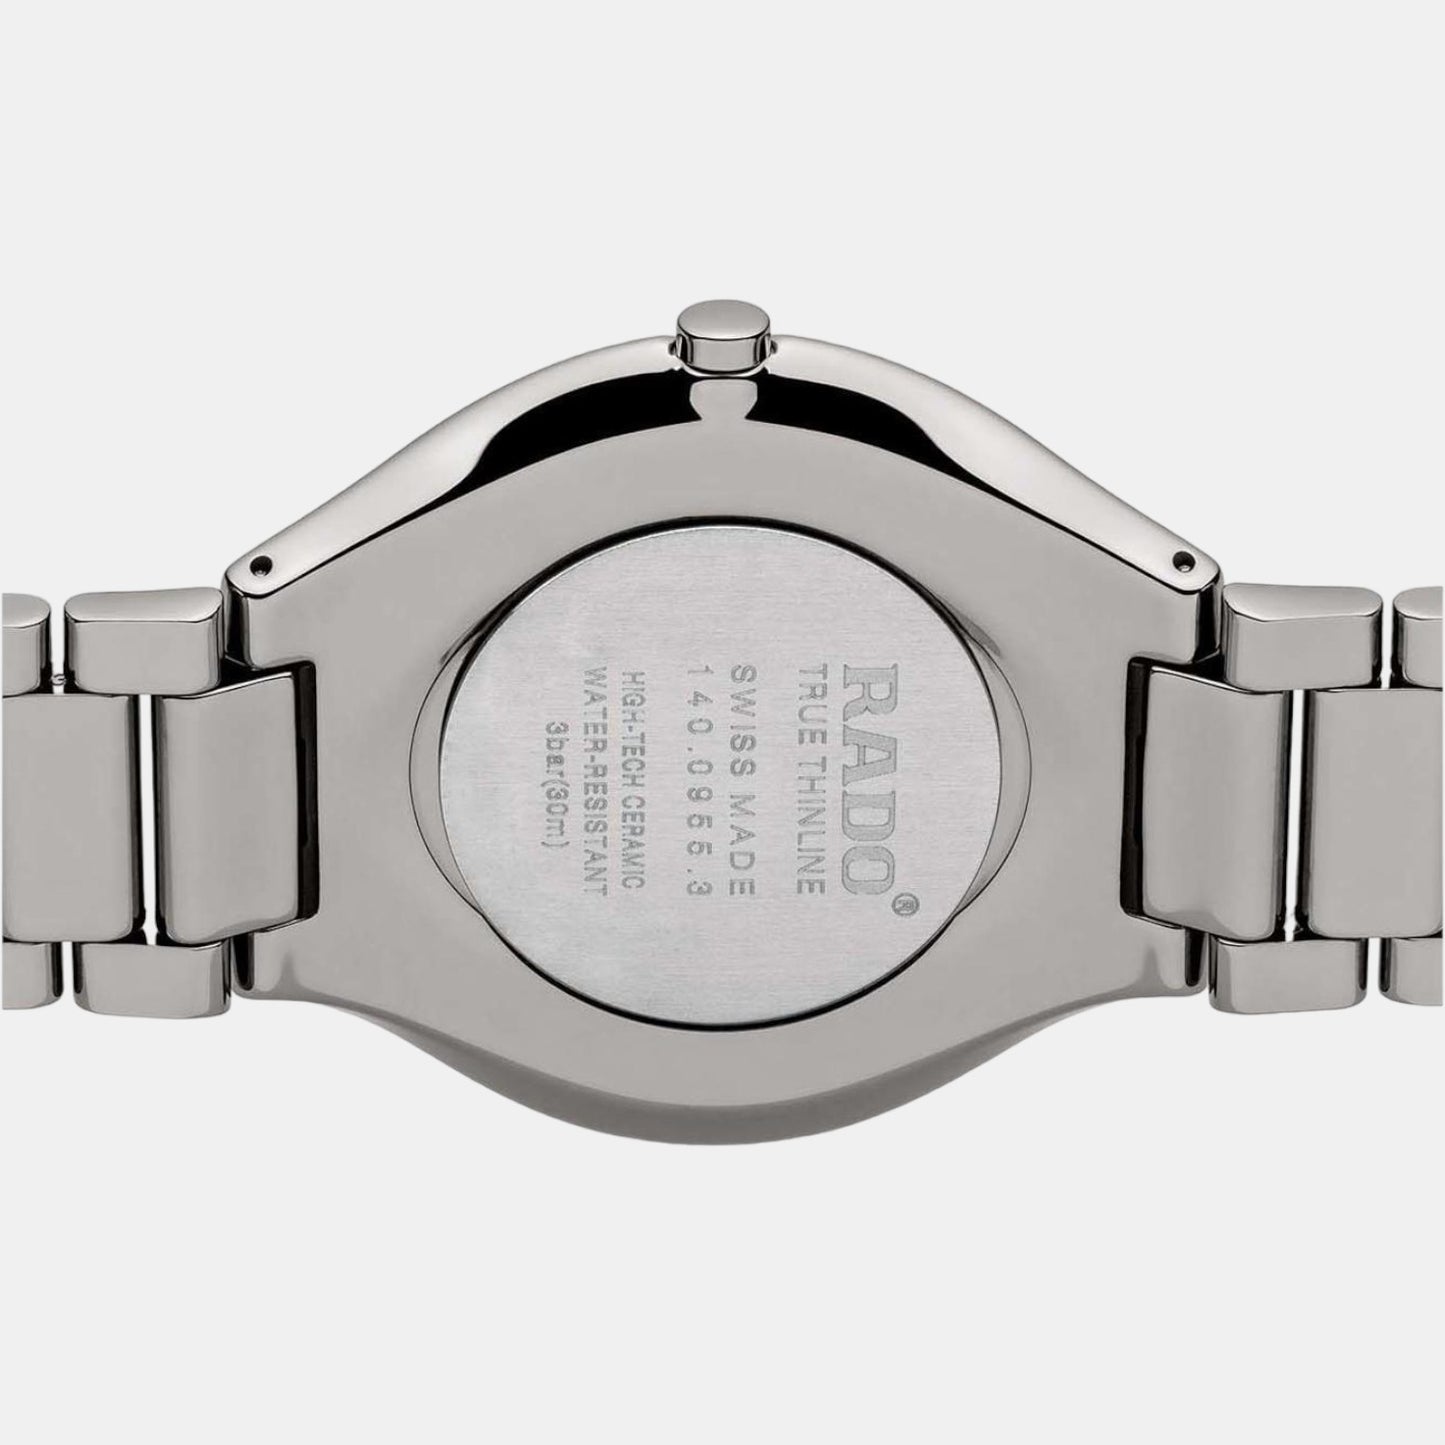 rado-grey-analog-unisex-watch-r27955122